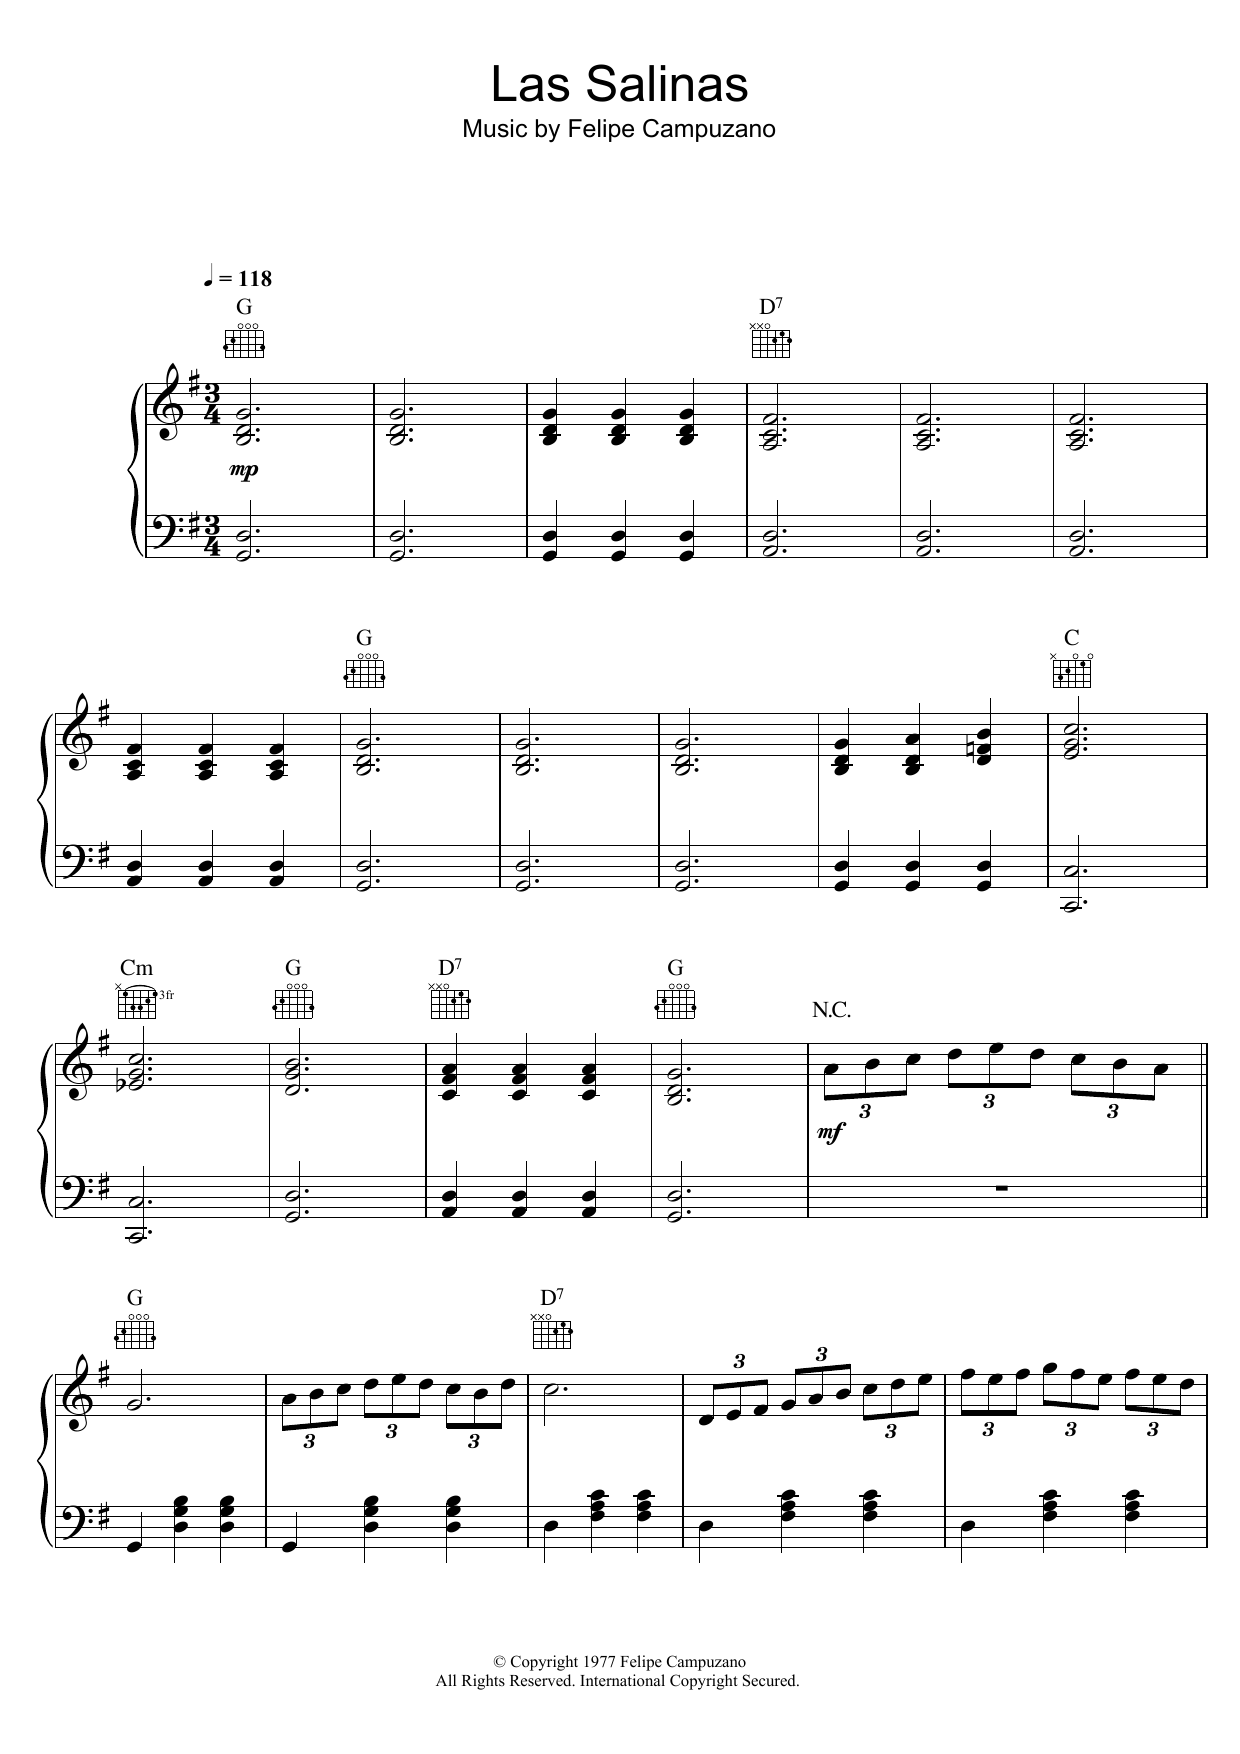 Felipe Campuzano Las Salinas Sheet Music Notes & Chords for Piano, Vocal & Guitar (Right-Hand Melody) - Download or Print PDF